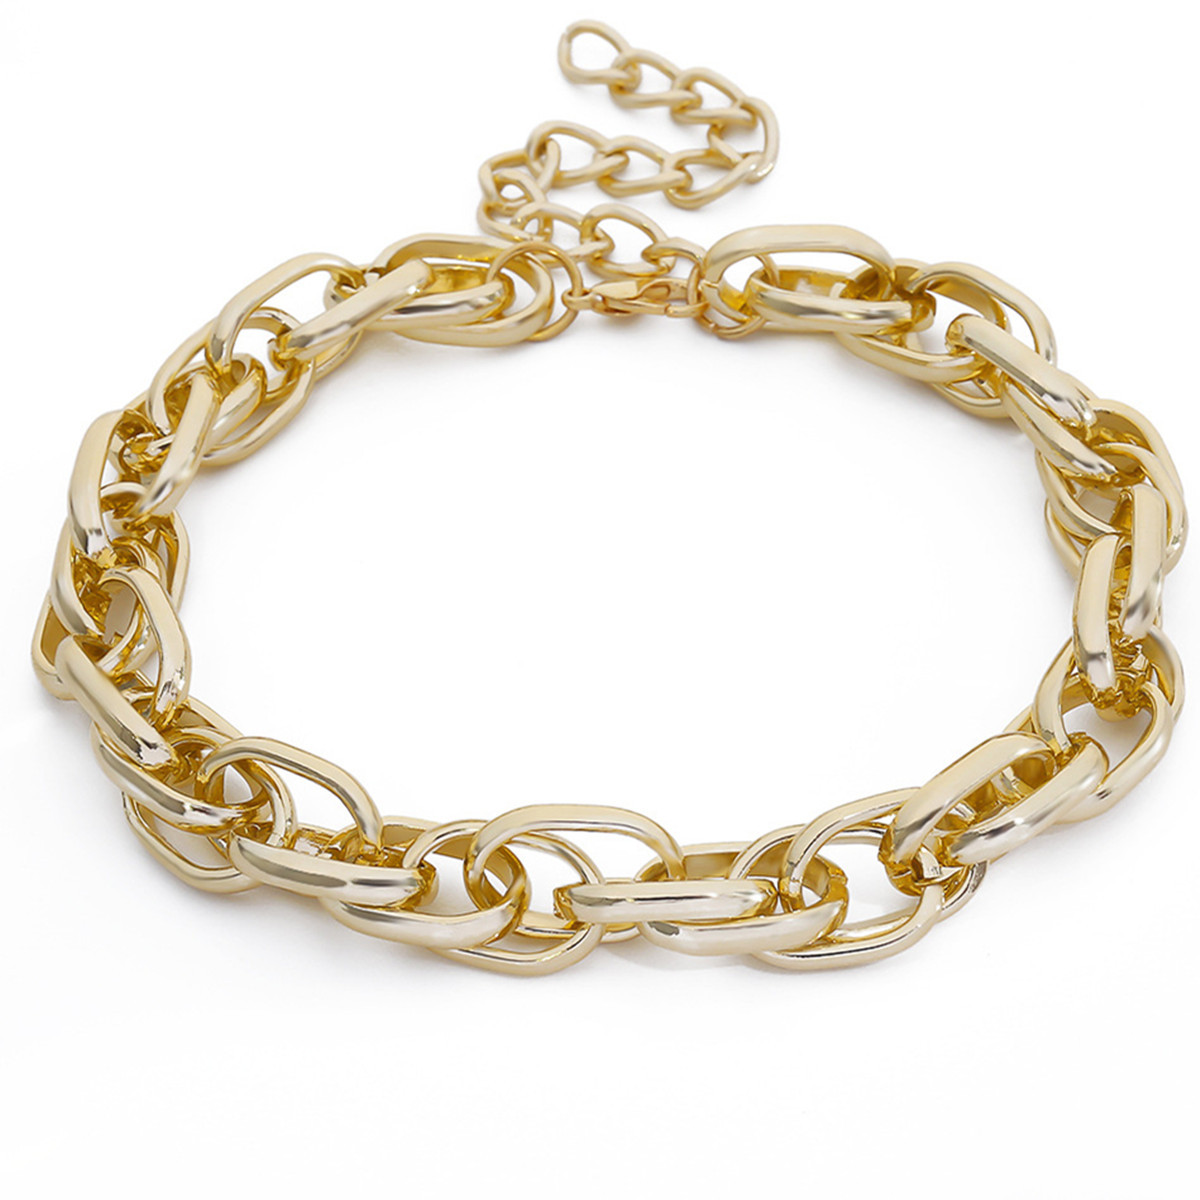 3:Bracelet Gold 17 5cm